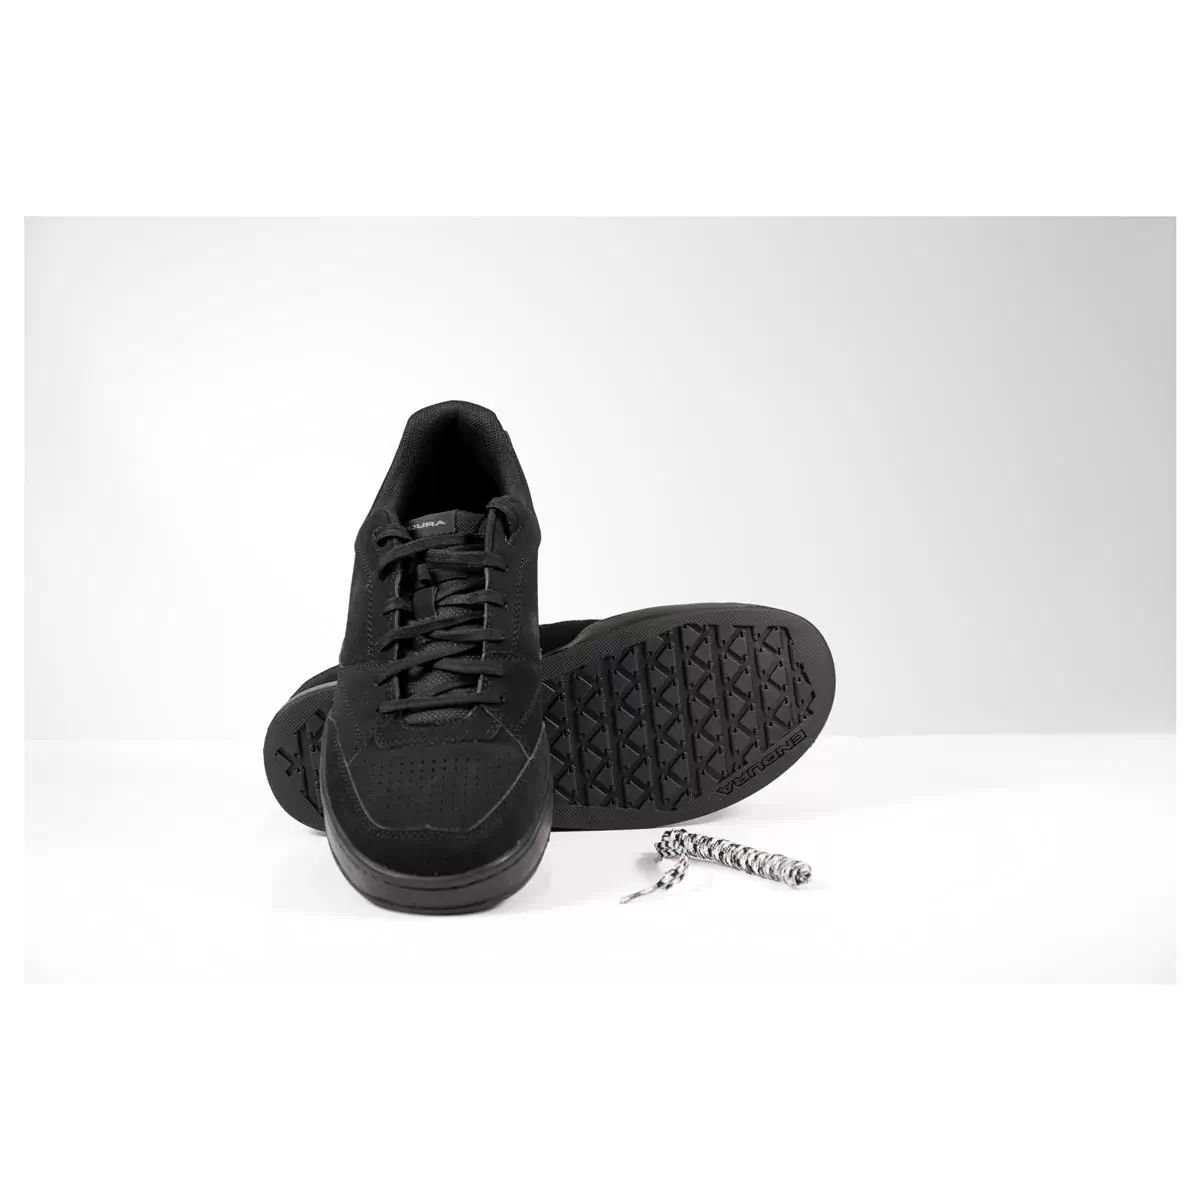 Hummvee Flat Pedal Shoes Black Size 39 #3